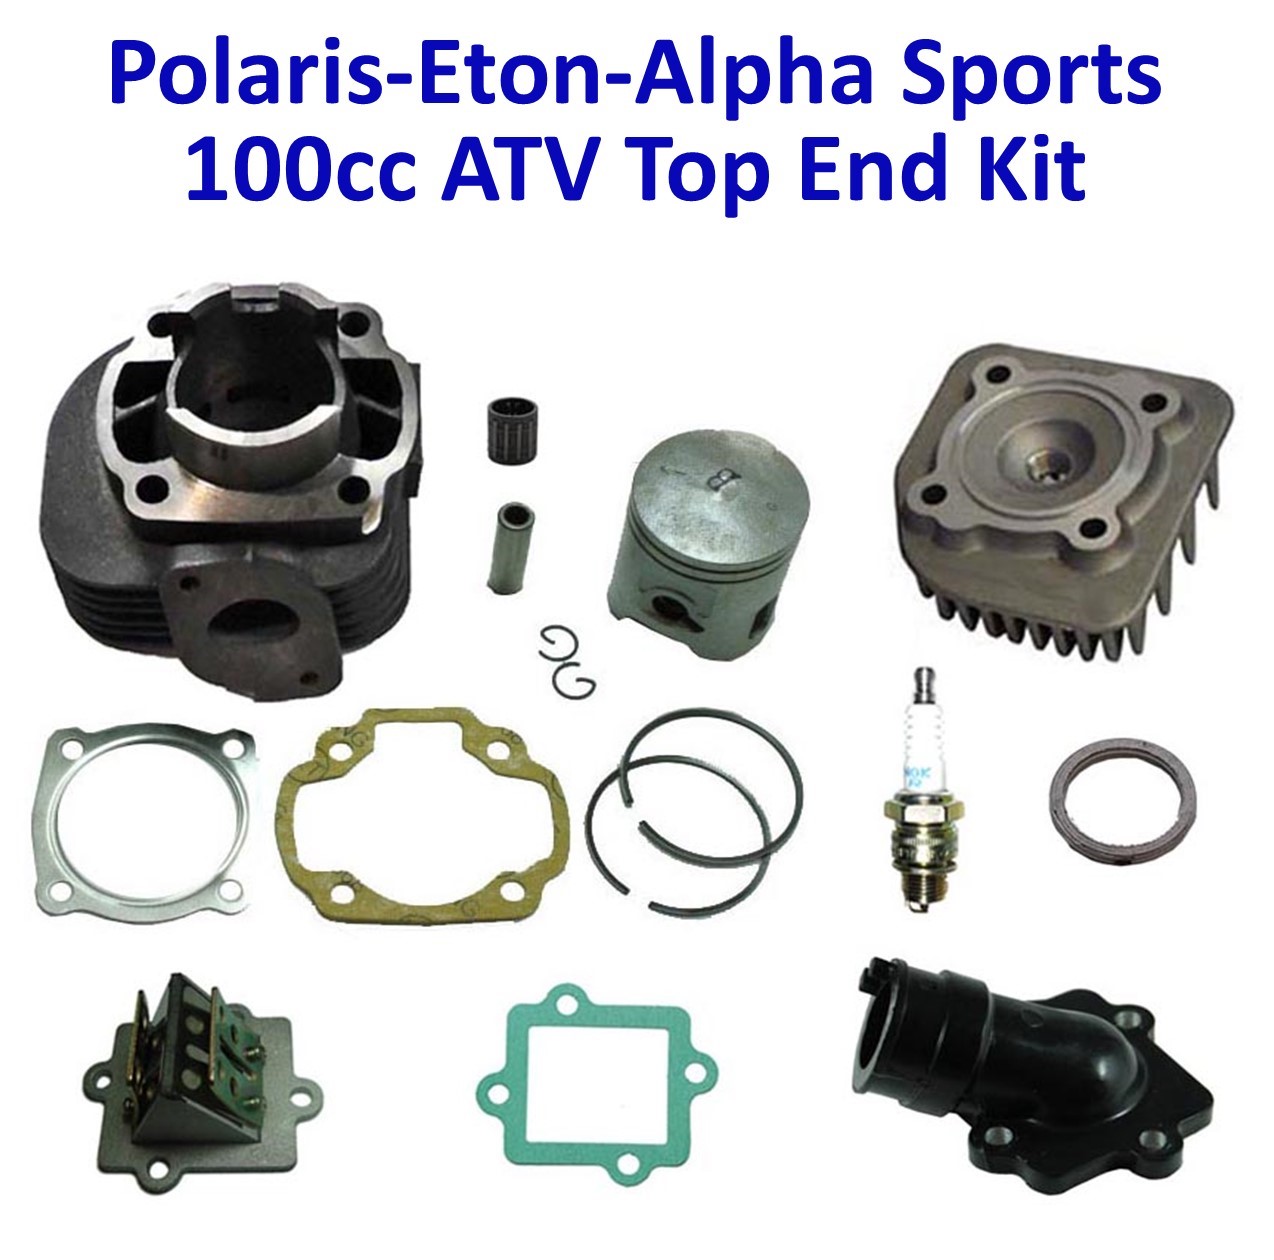 Polaris-Eton-Alpha Sports 100cc Big Bore 54mm 2 Stroke Top End Cylinder Kit Upgrade from 90cc to 100cc